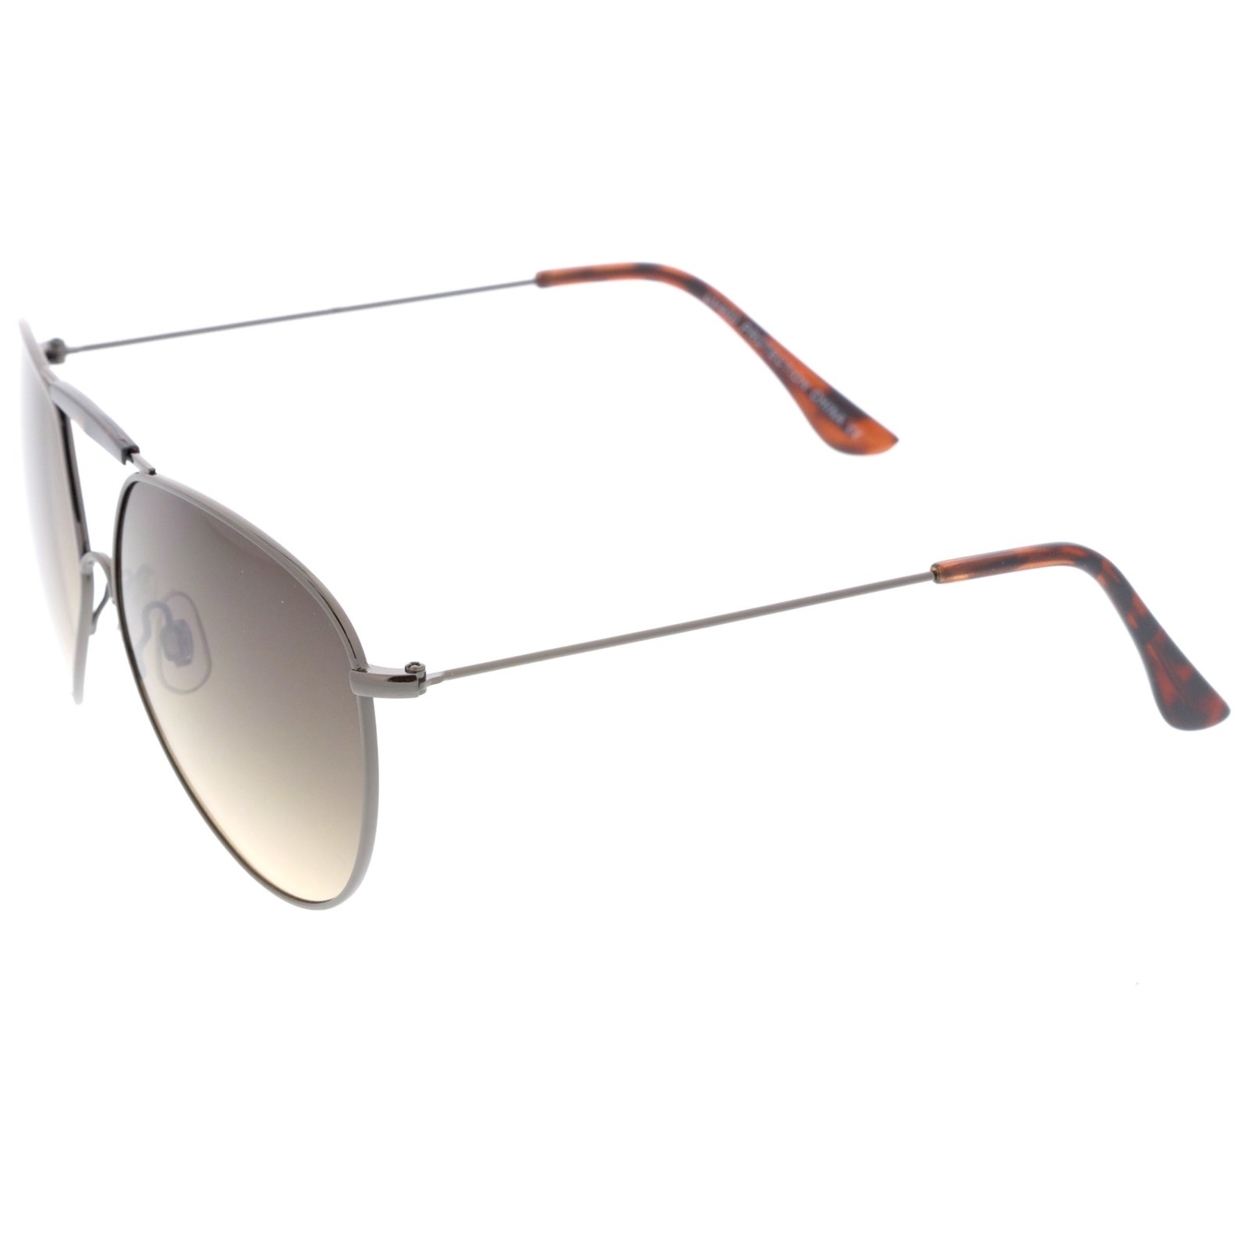 Casual Brow Bar Detail Slim Temple Metal Frame Aviator Sunglasses 62mm - Gold-Tortoise / Amber